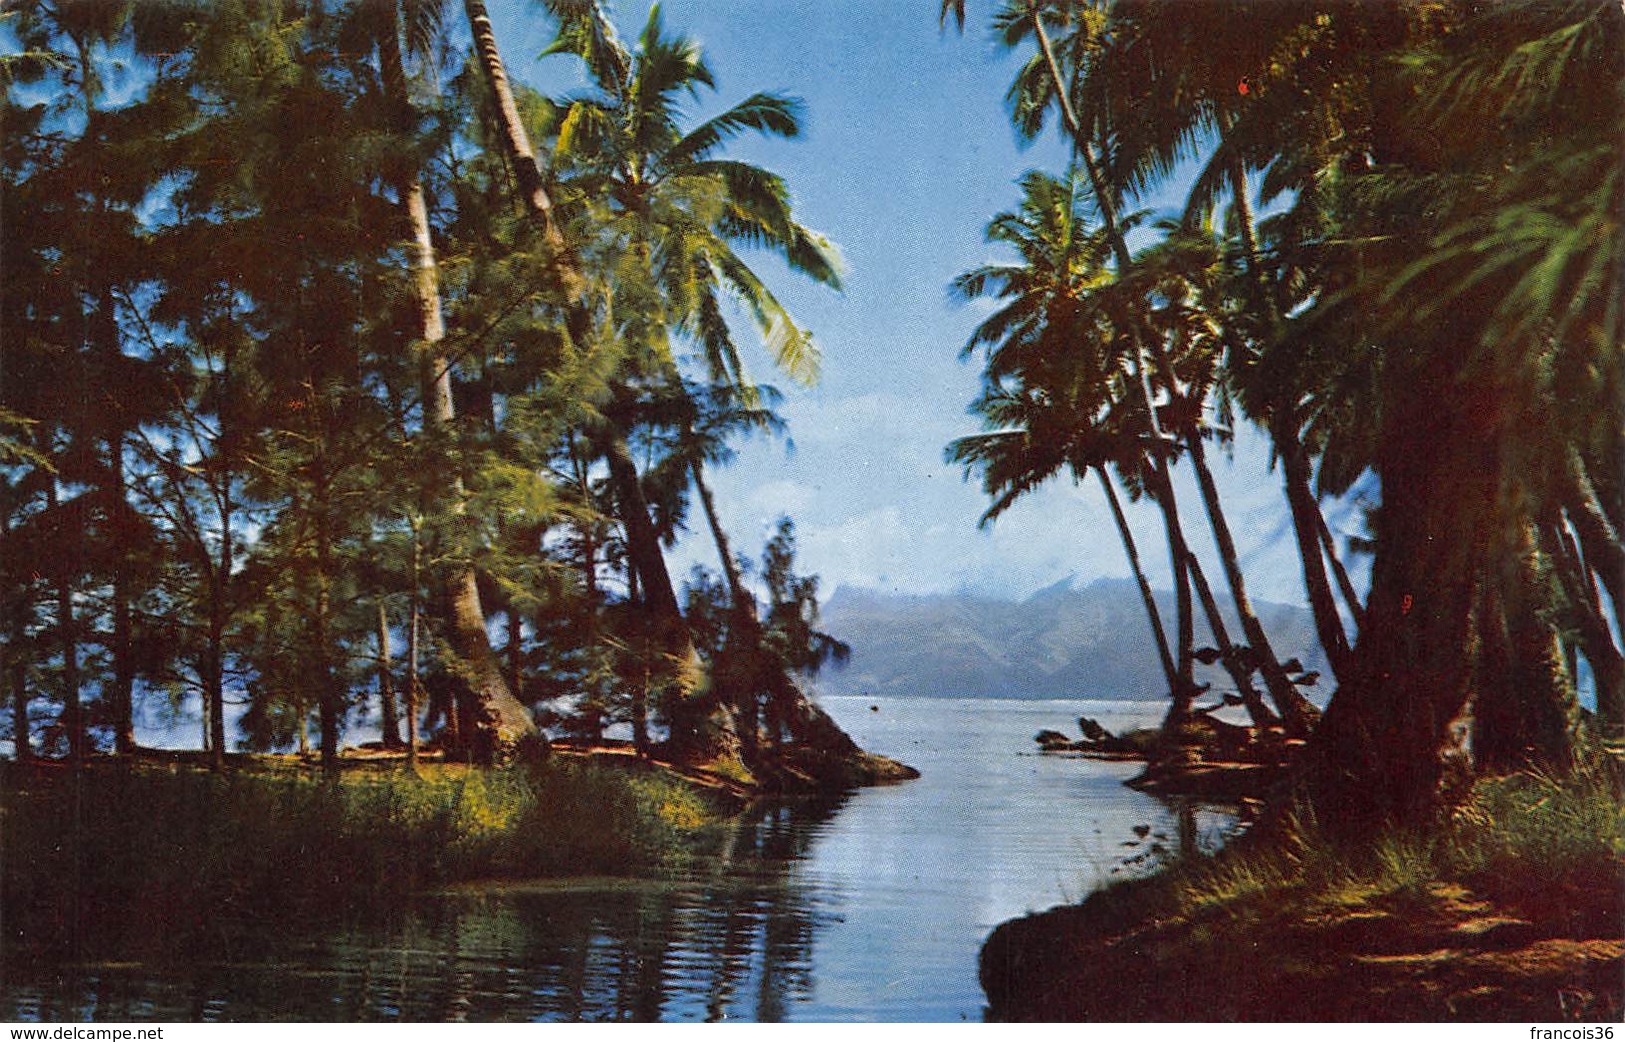 Lot de 36 CPSM petits et grands formats : OCEANIE Tahiti Philippines Indonésie Seychelles Ile Maurice etc.